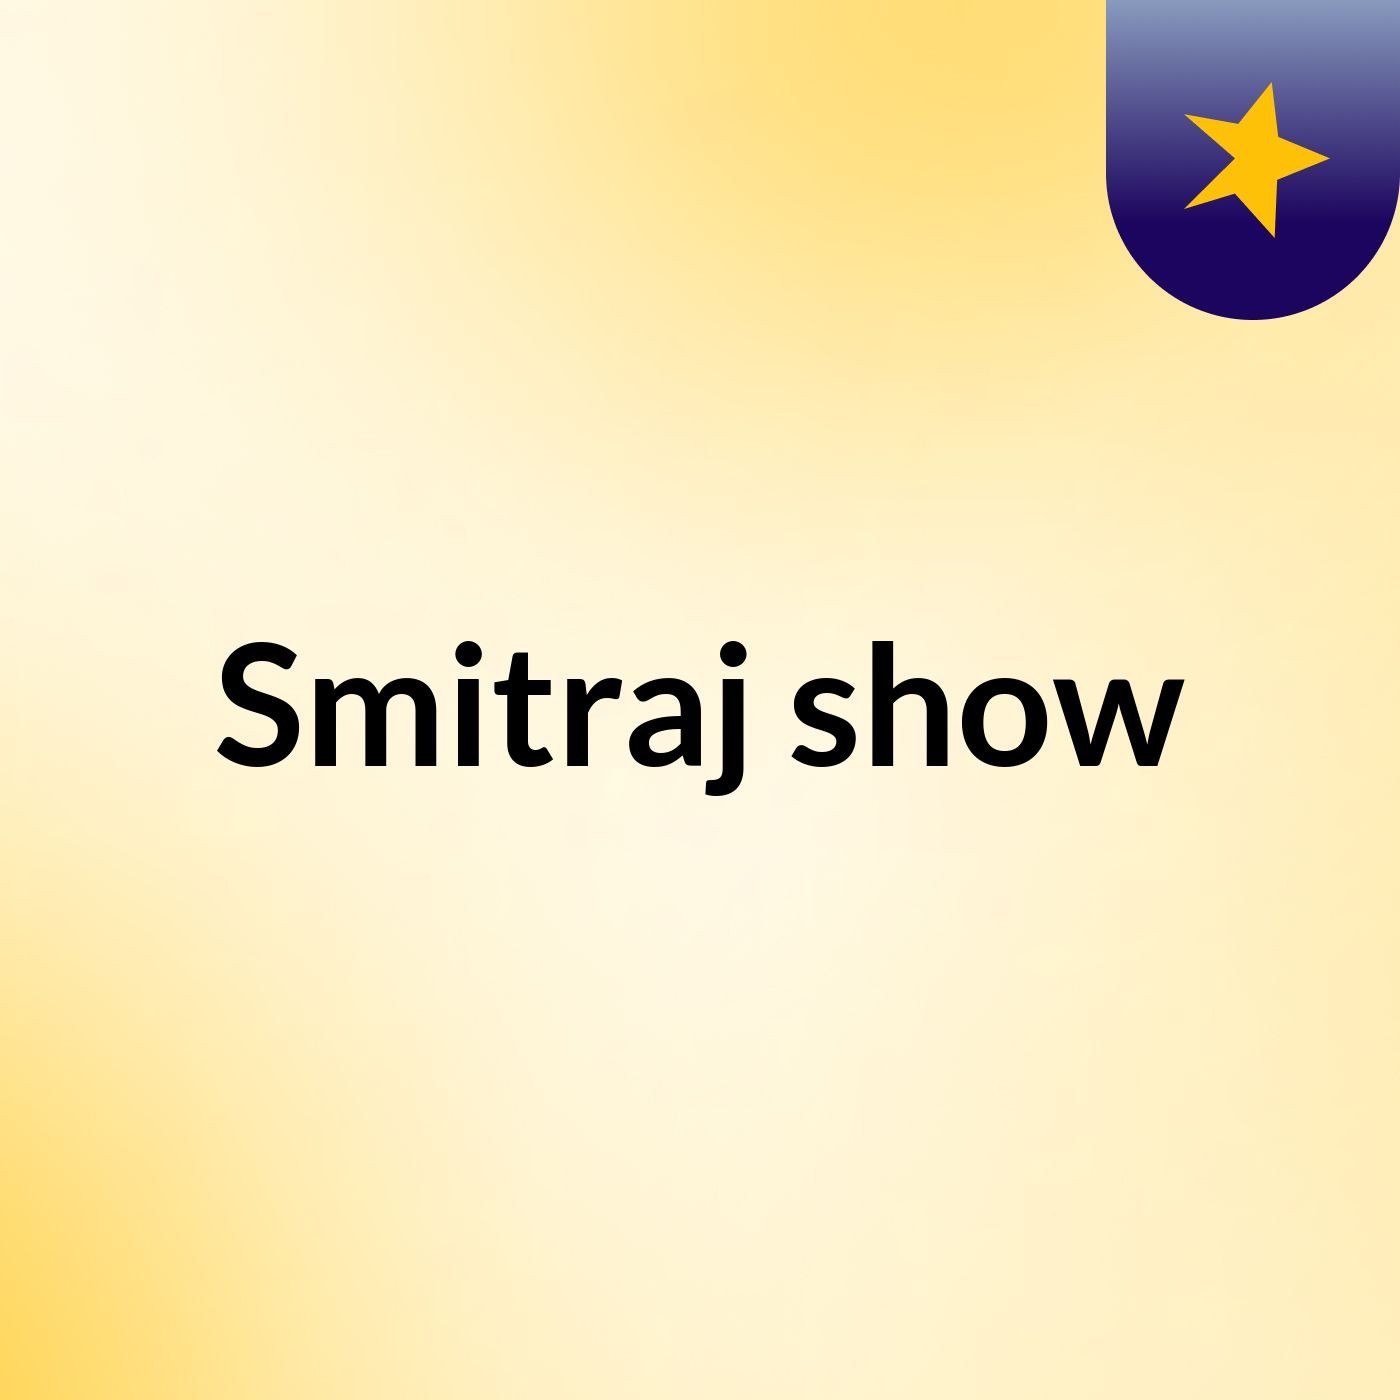 Smitraj show